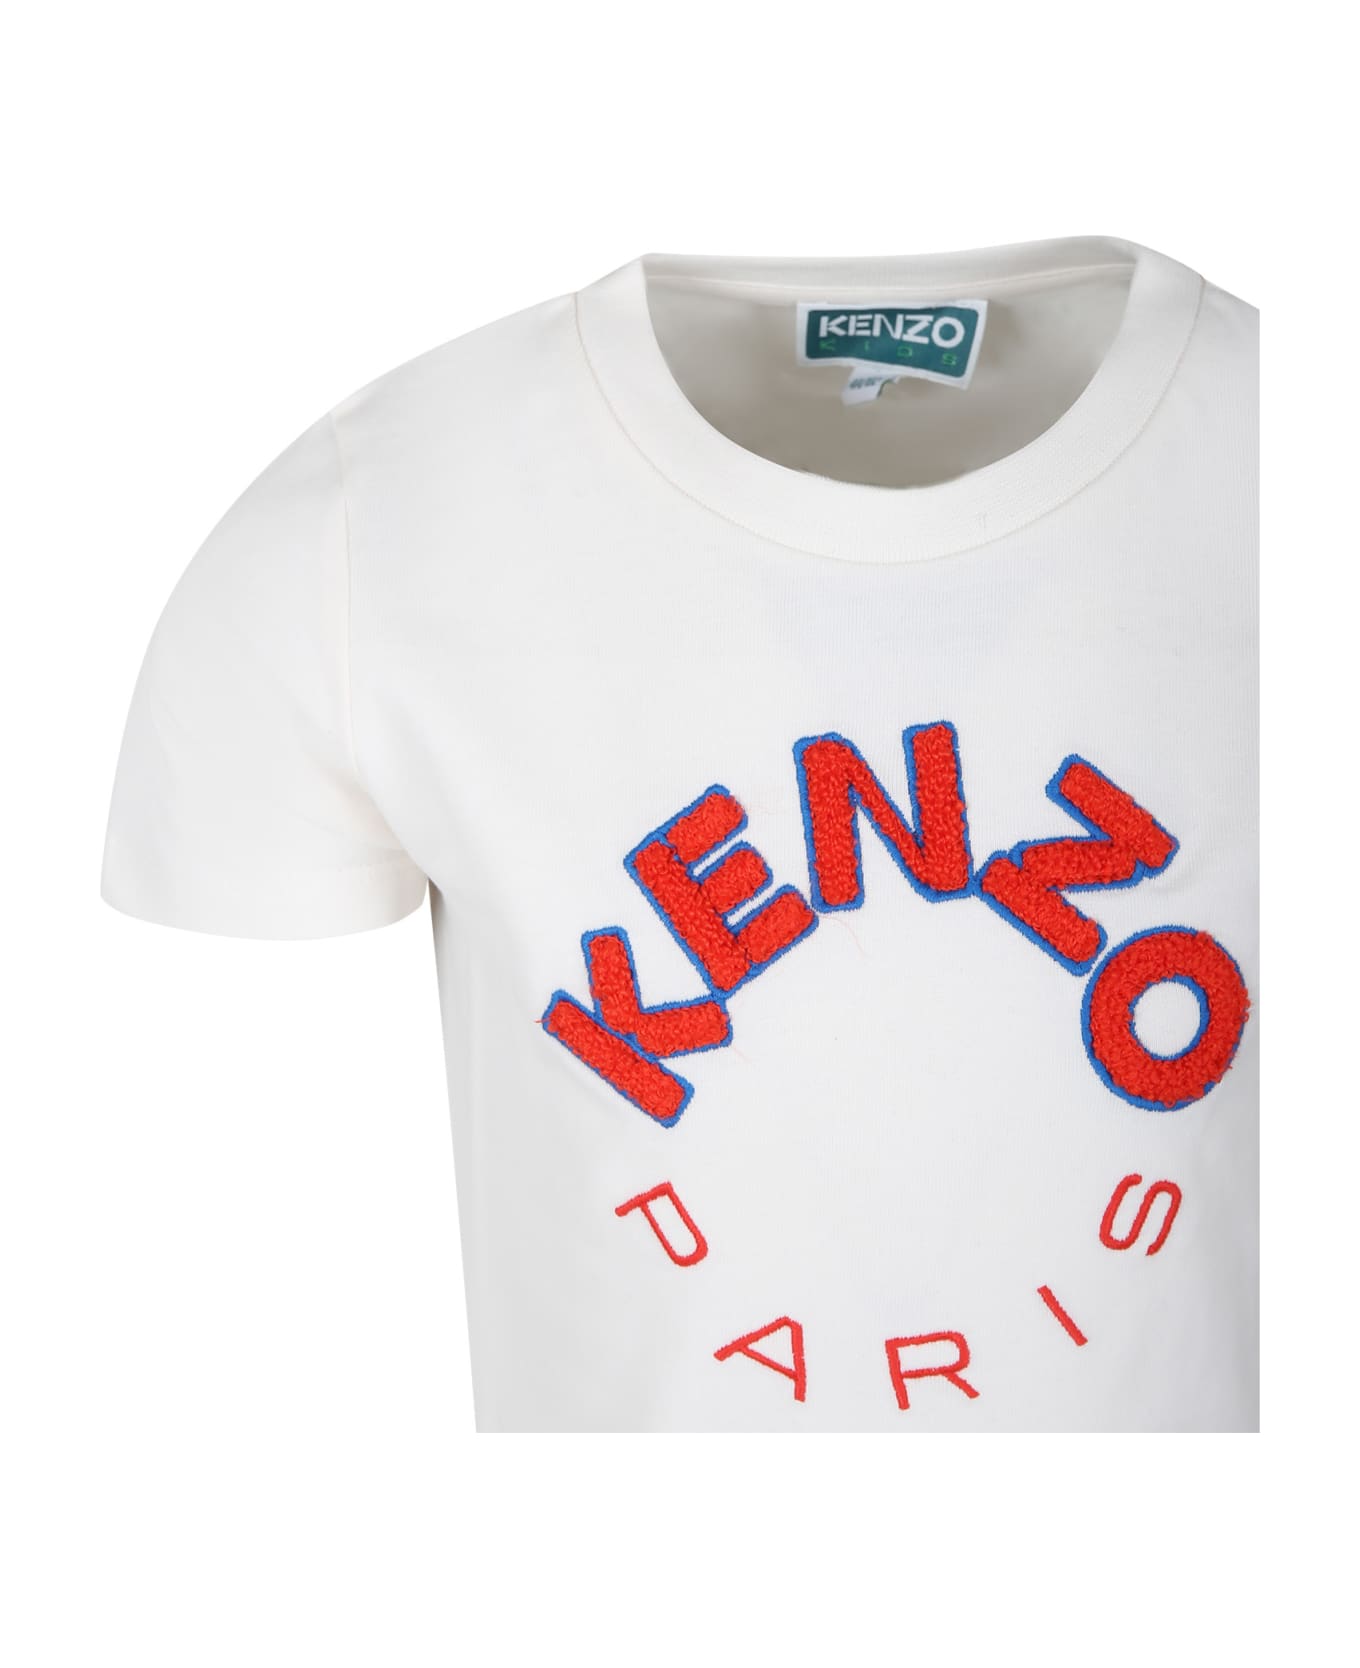 Kenzo Kids White T-shirt For Boy With Logo - Avorio